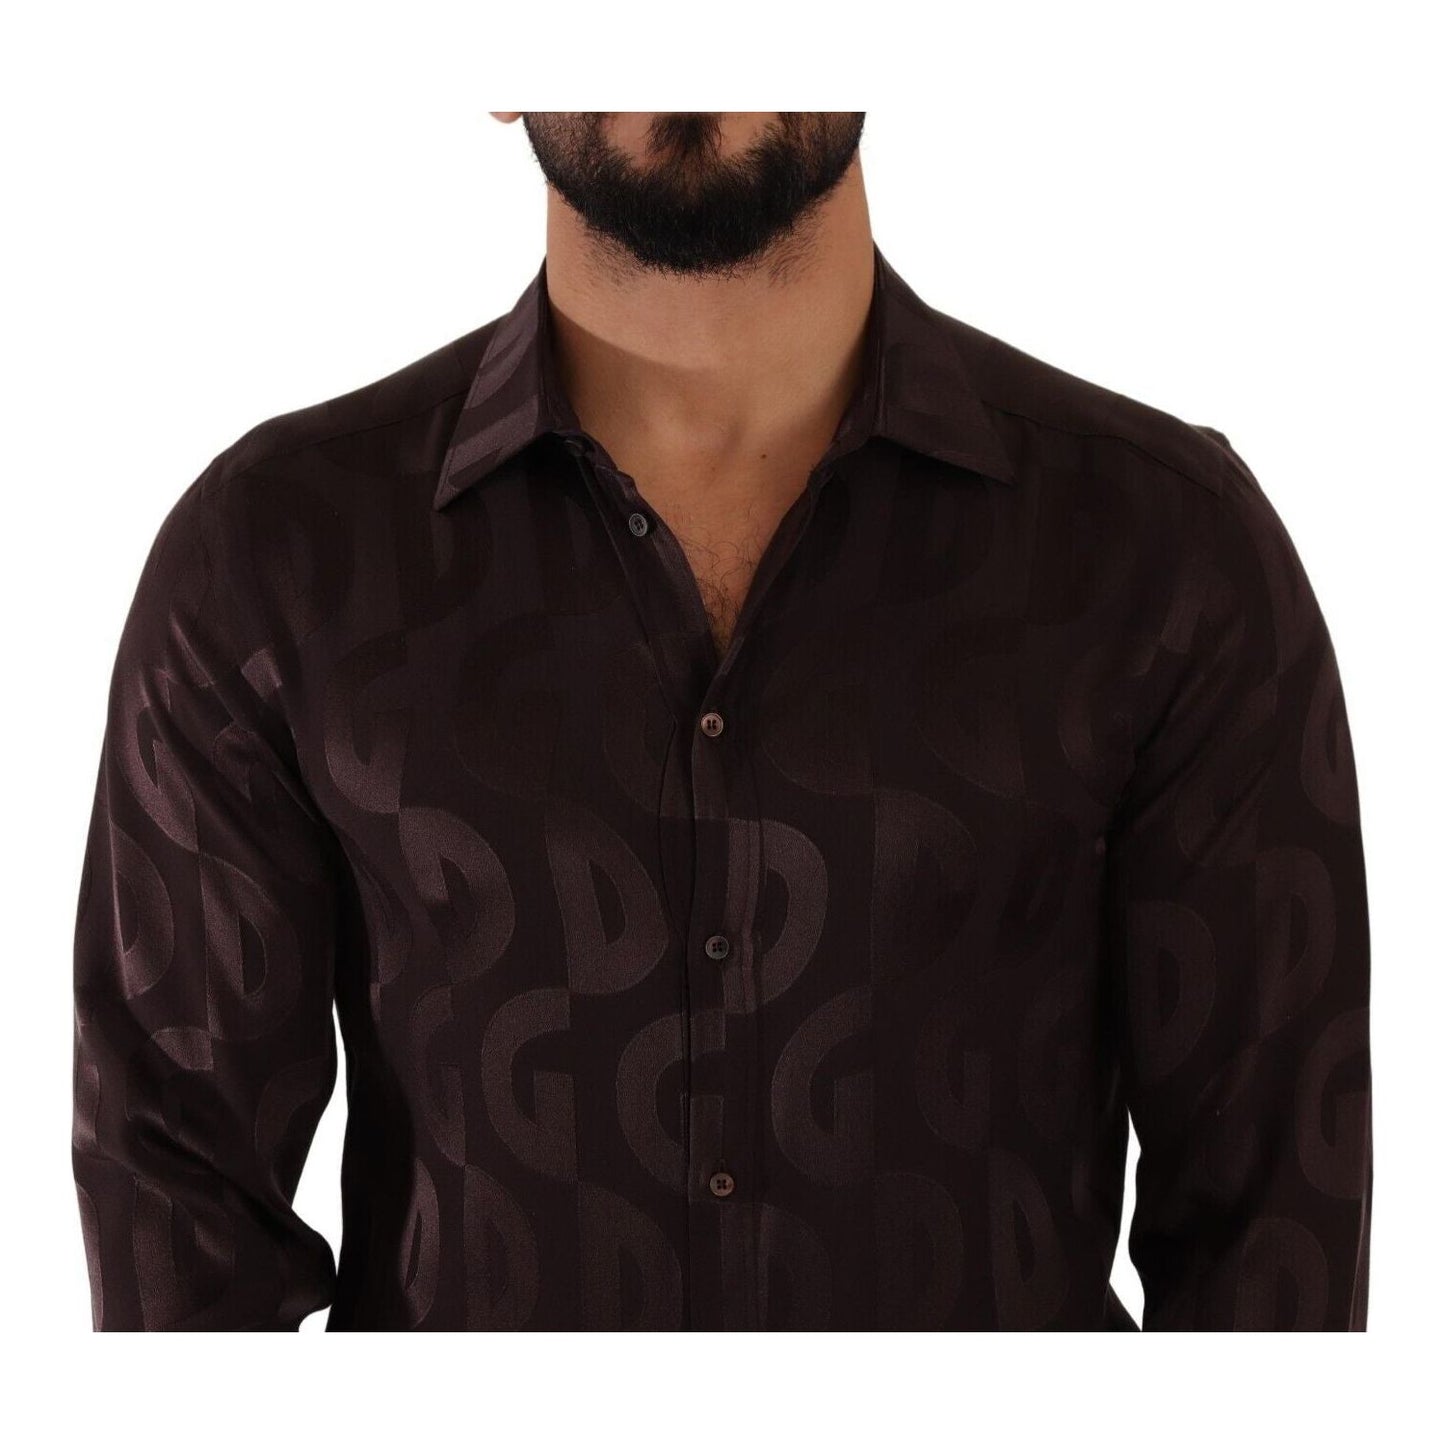 Dolce & Gabbana Elegant Bordeaux Silk Dress Shirt bordeaux-gold-logo-silk-slim-fit-mens-shirt s-l1600-4-4-445e222c-c31.jpg